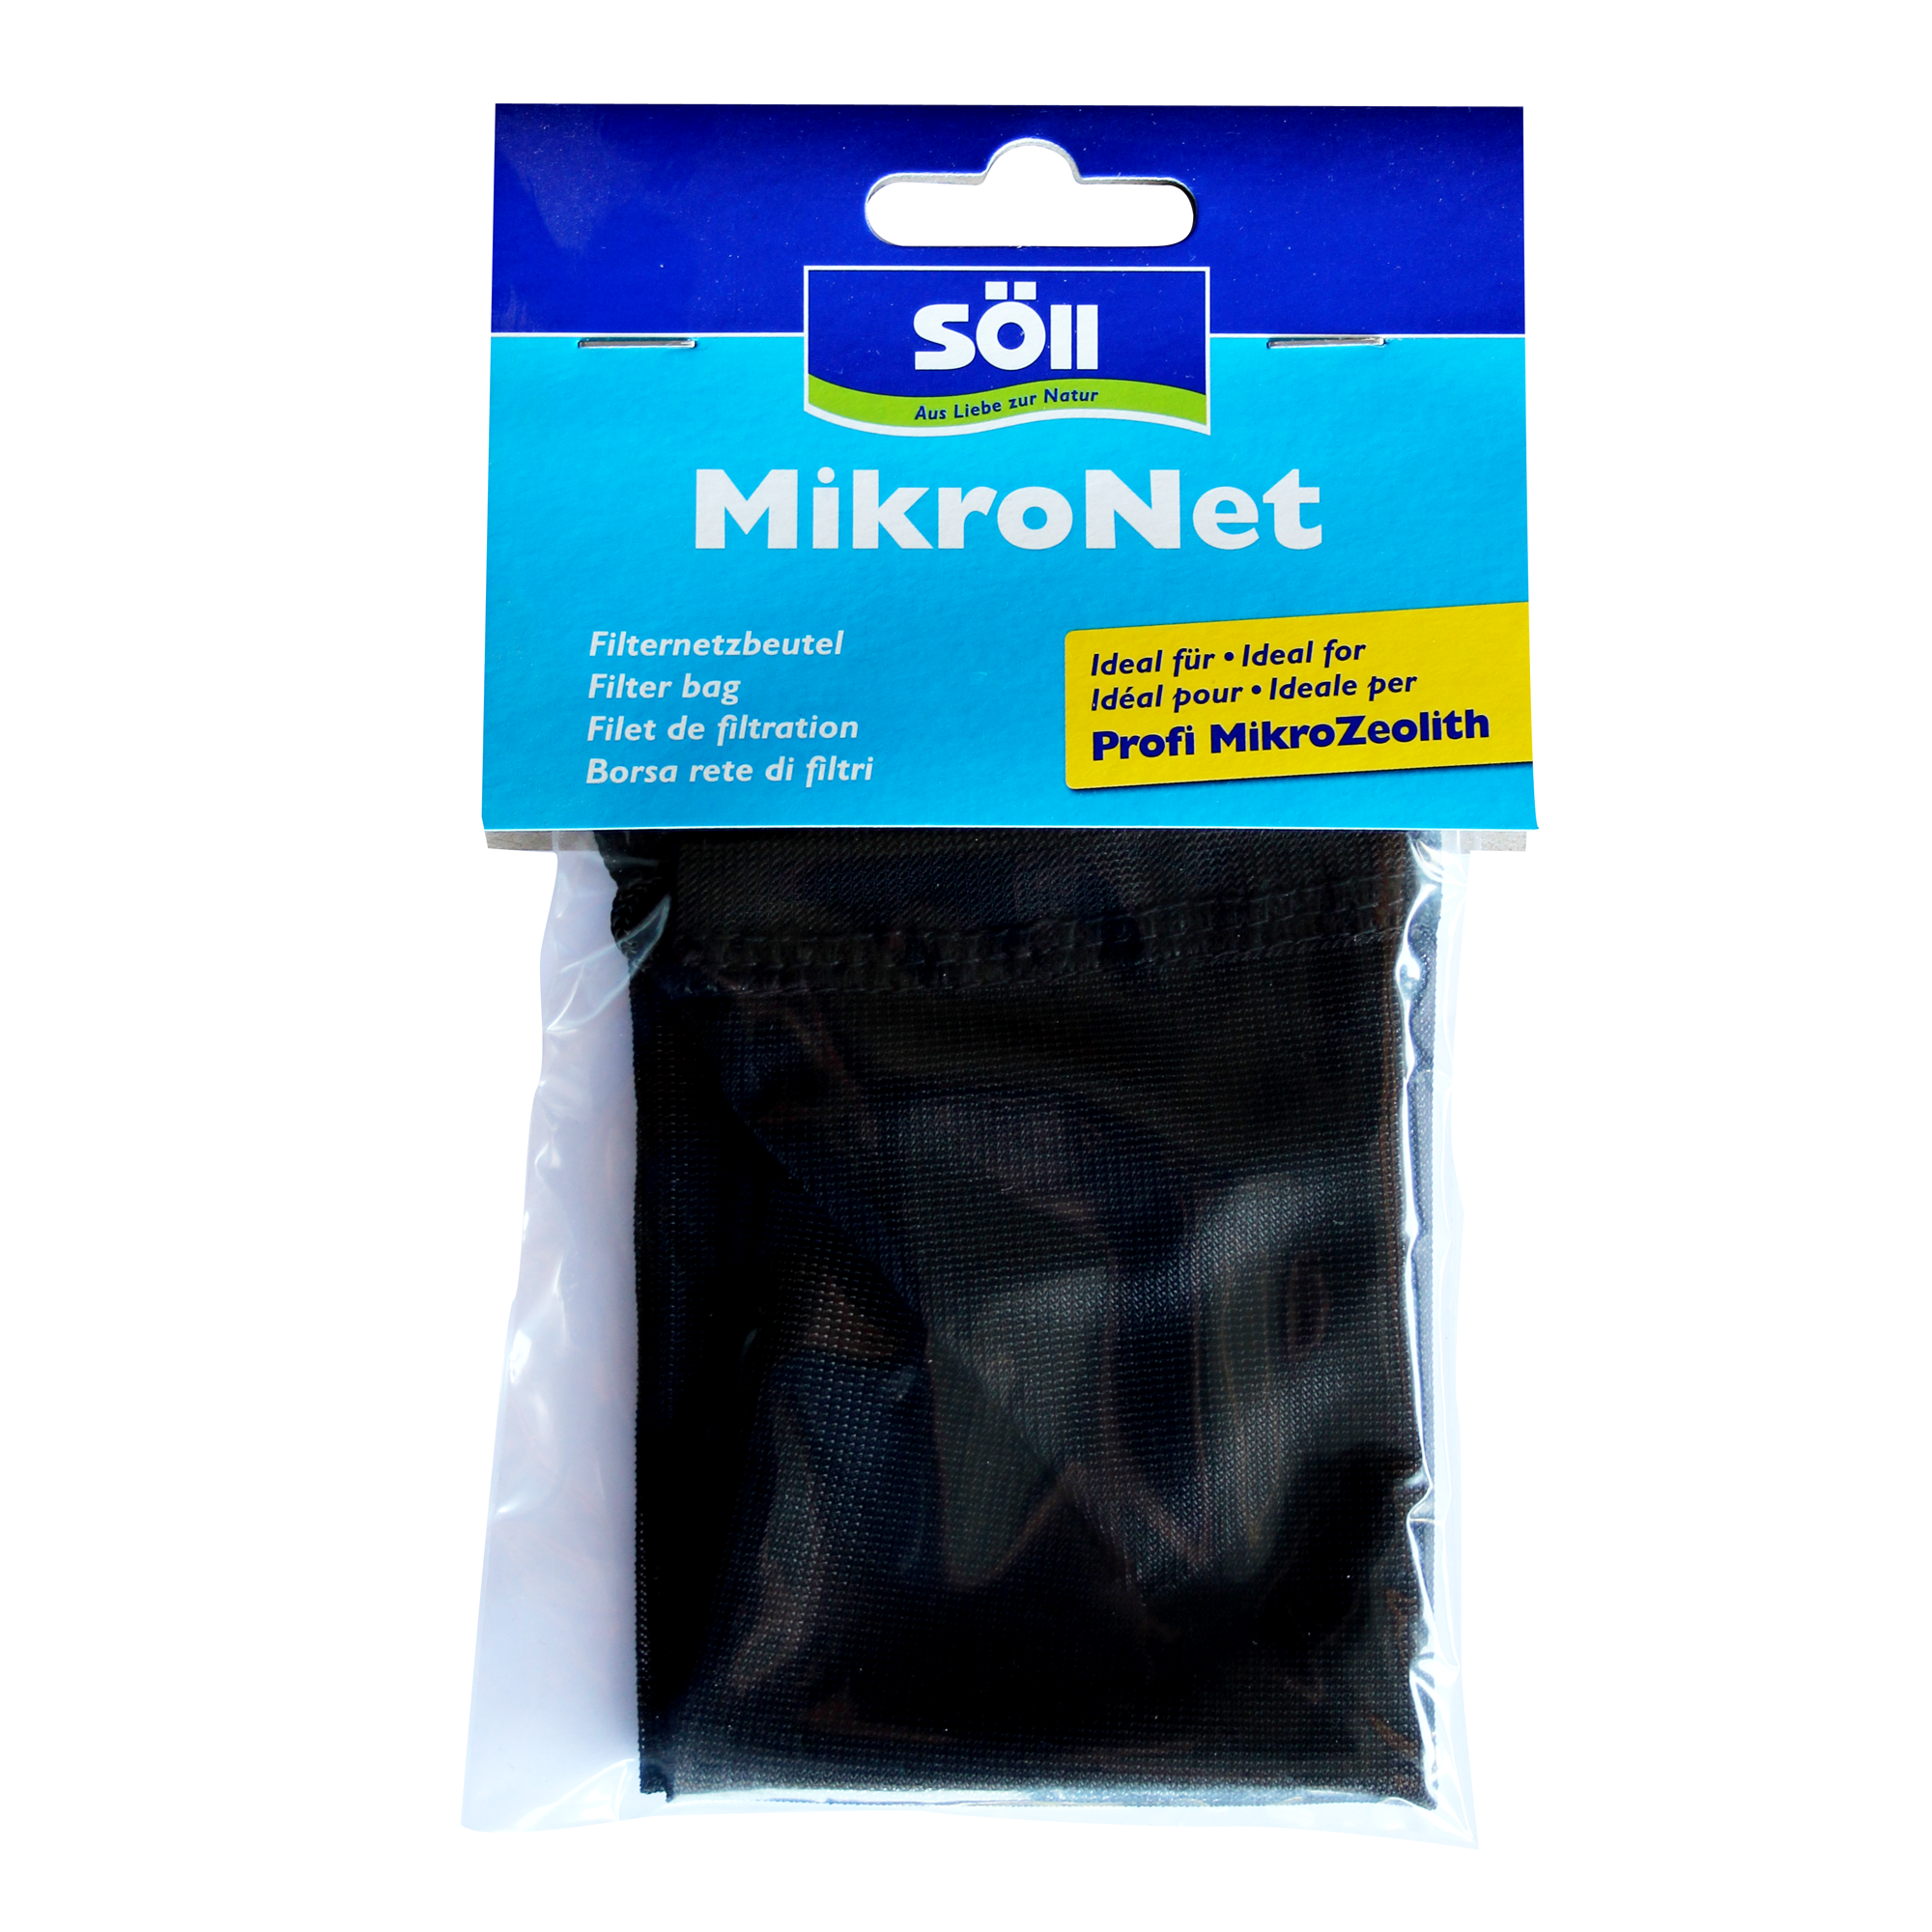 MikroNet 16 x 20 cm, 1 Stück + product picture